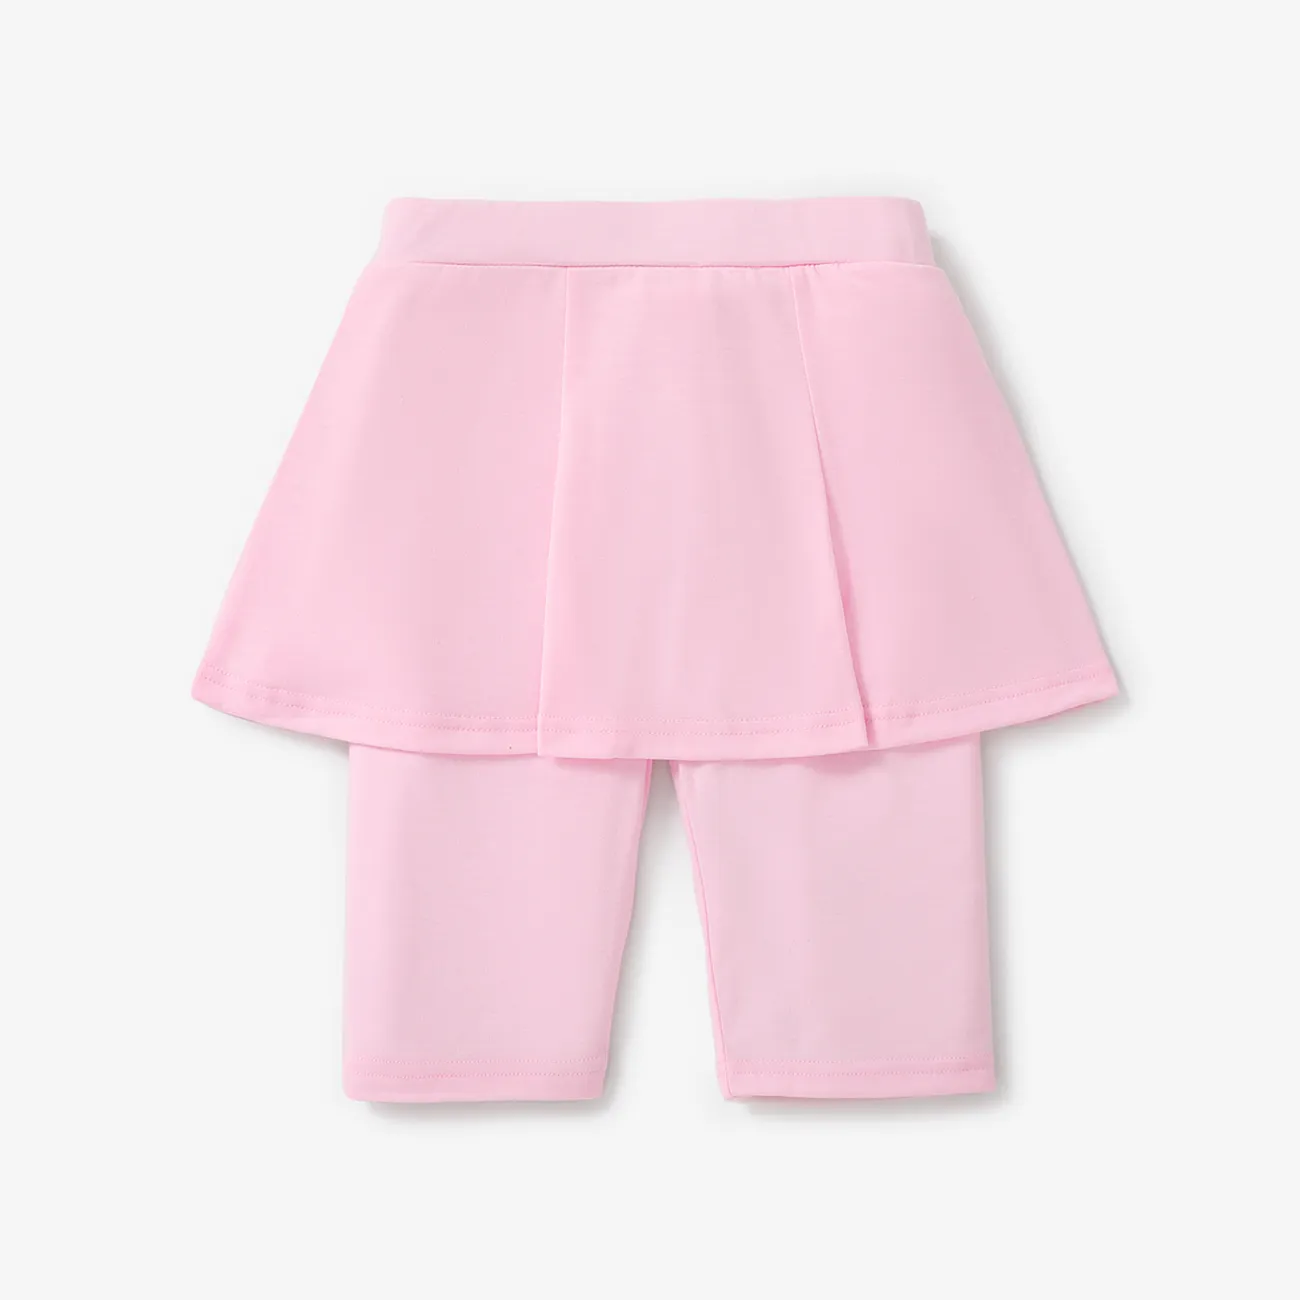 pantaloncini leggings bambina tinta unita finti due gonne Rosa big image 1